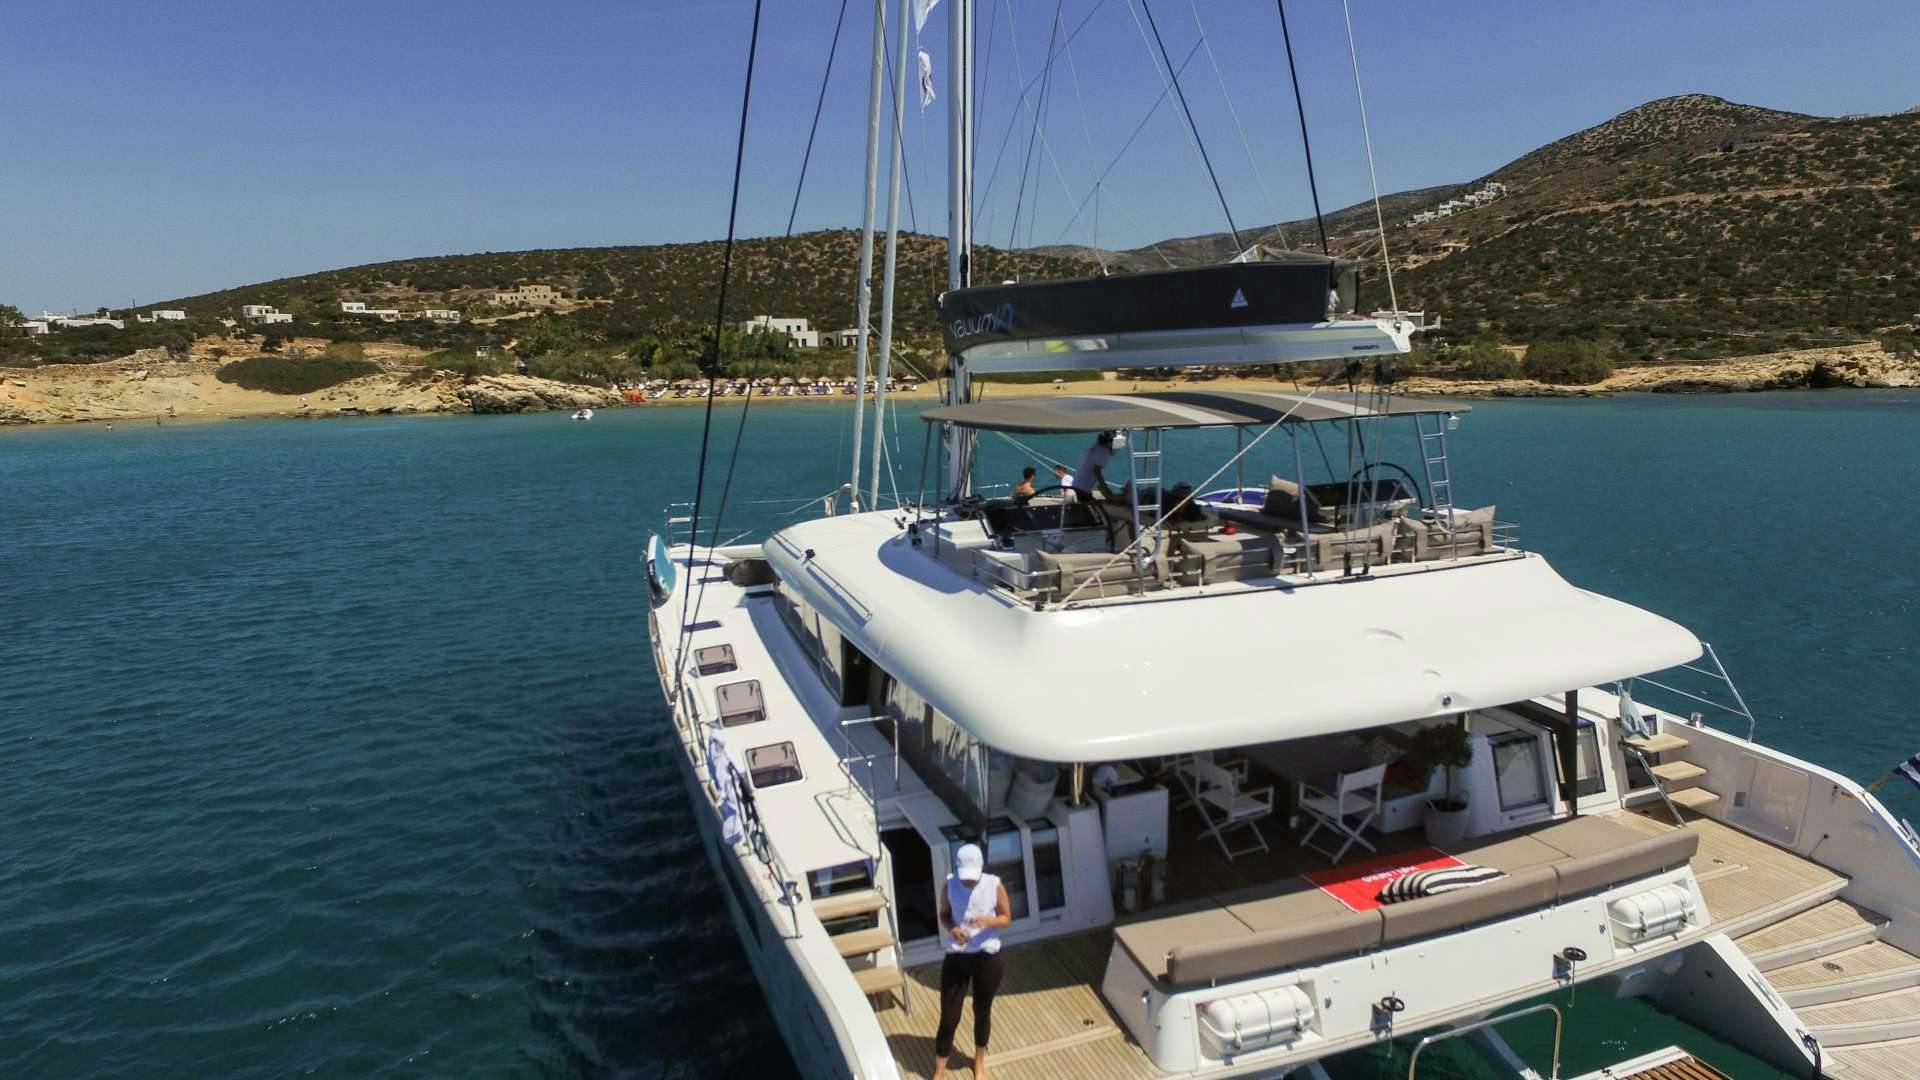 valium62 - Yacht Charter Milos & Boat hire in Greece 1